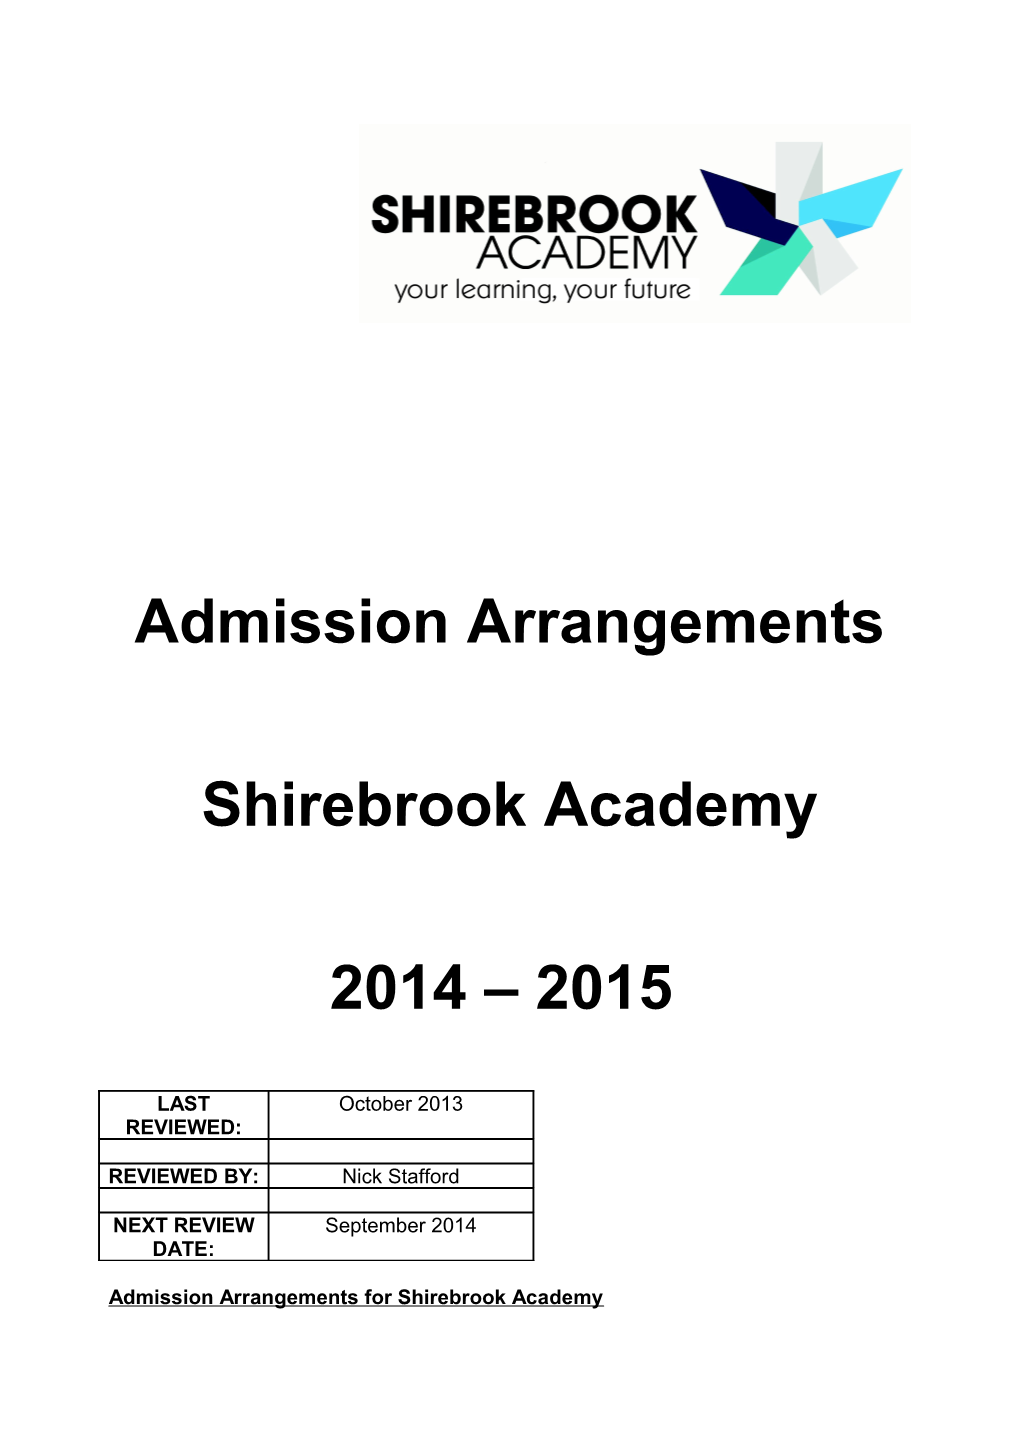 Admission Arrangements for Shirebrook Academy